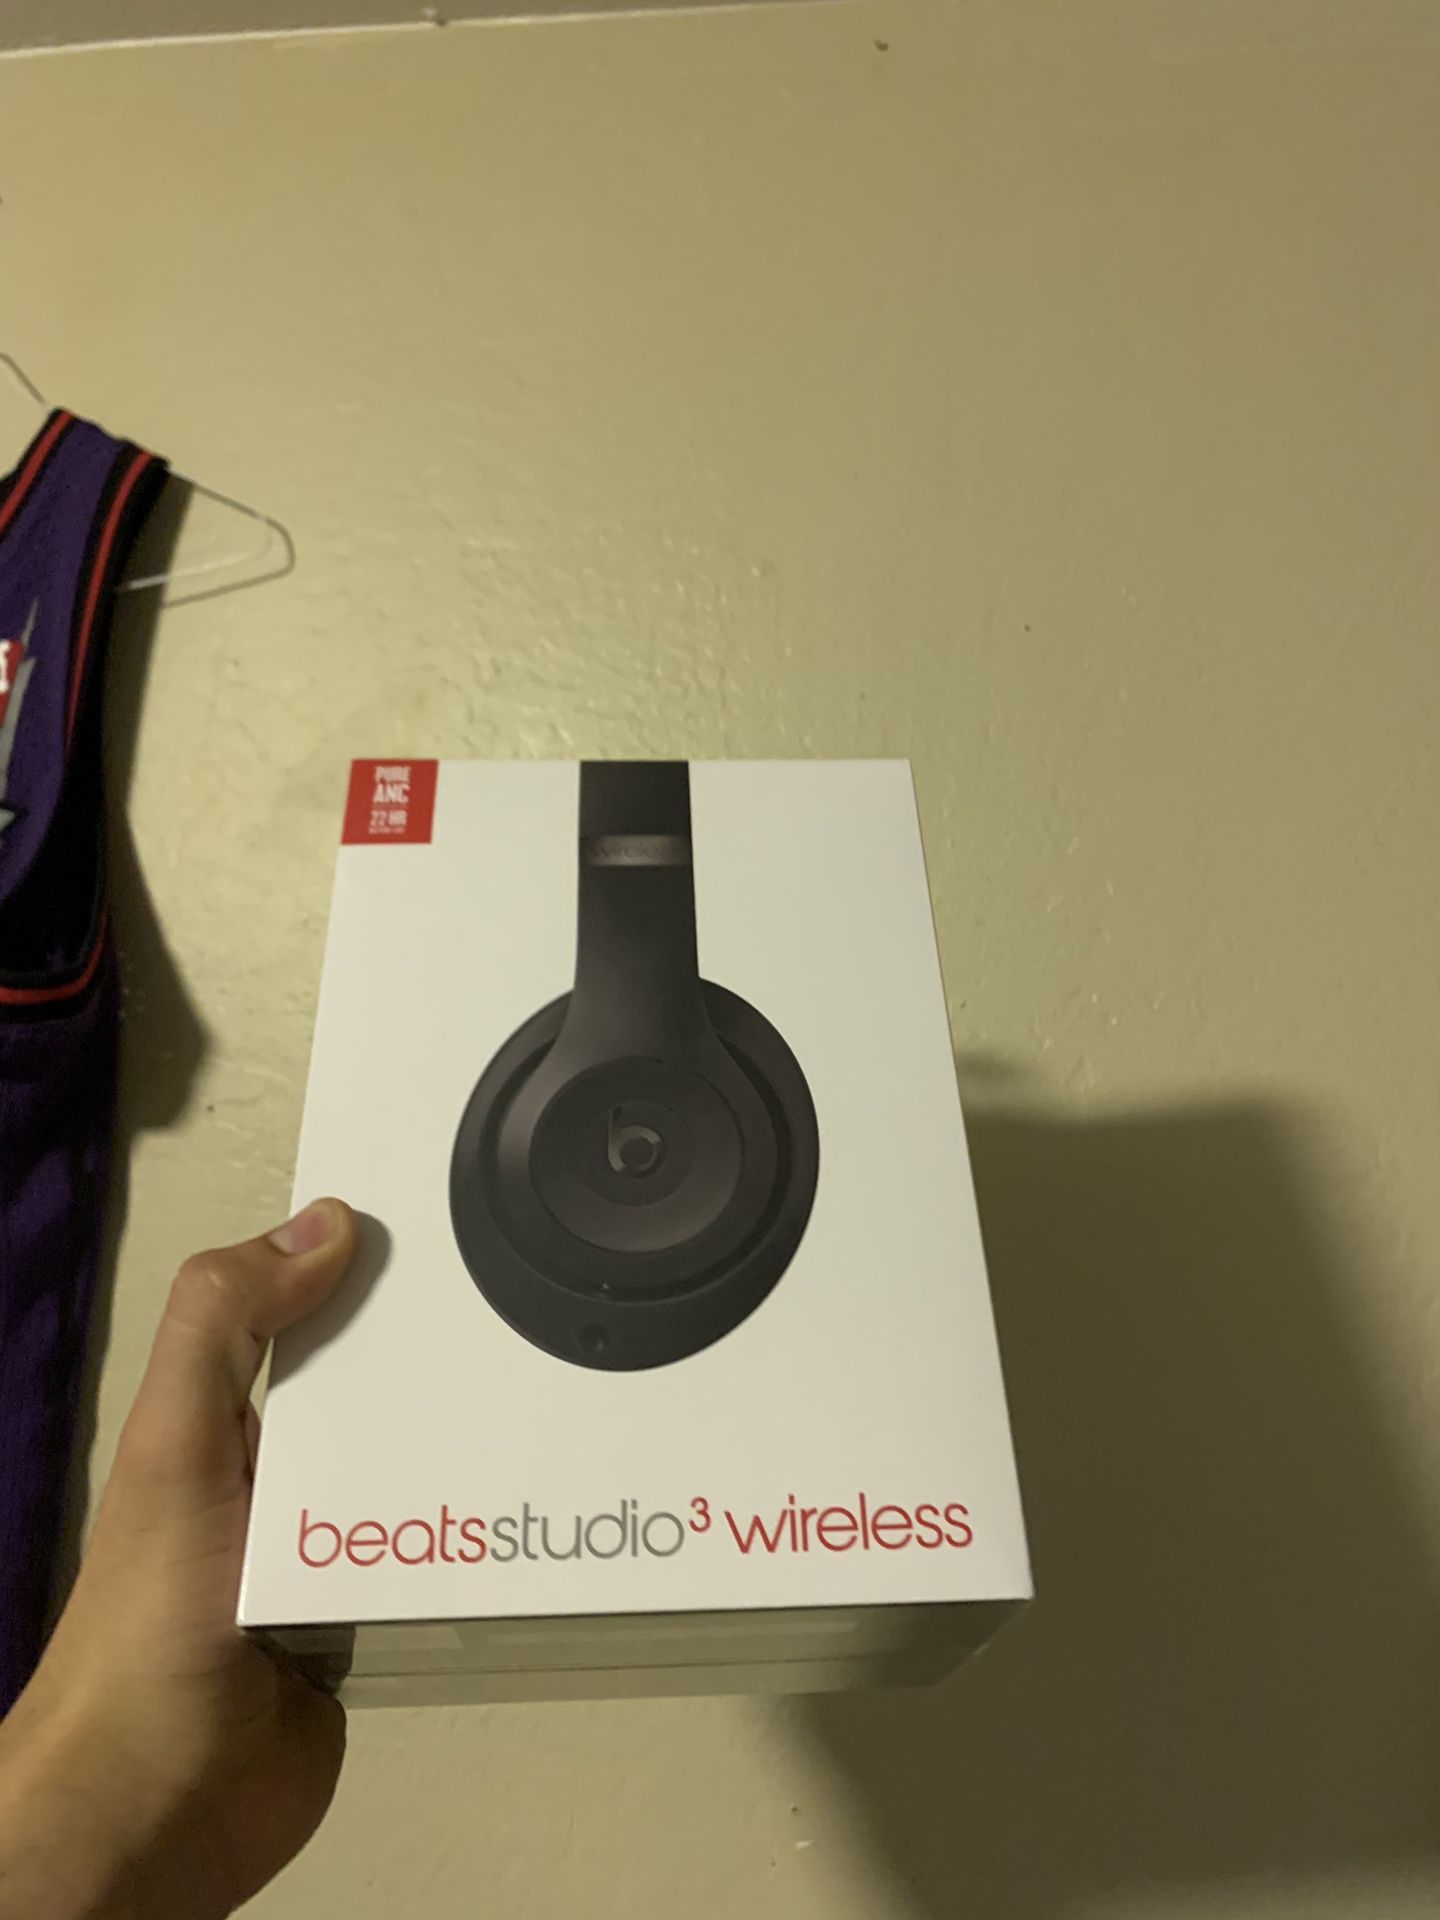 Beats studio 3 wireless